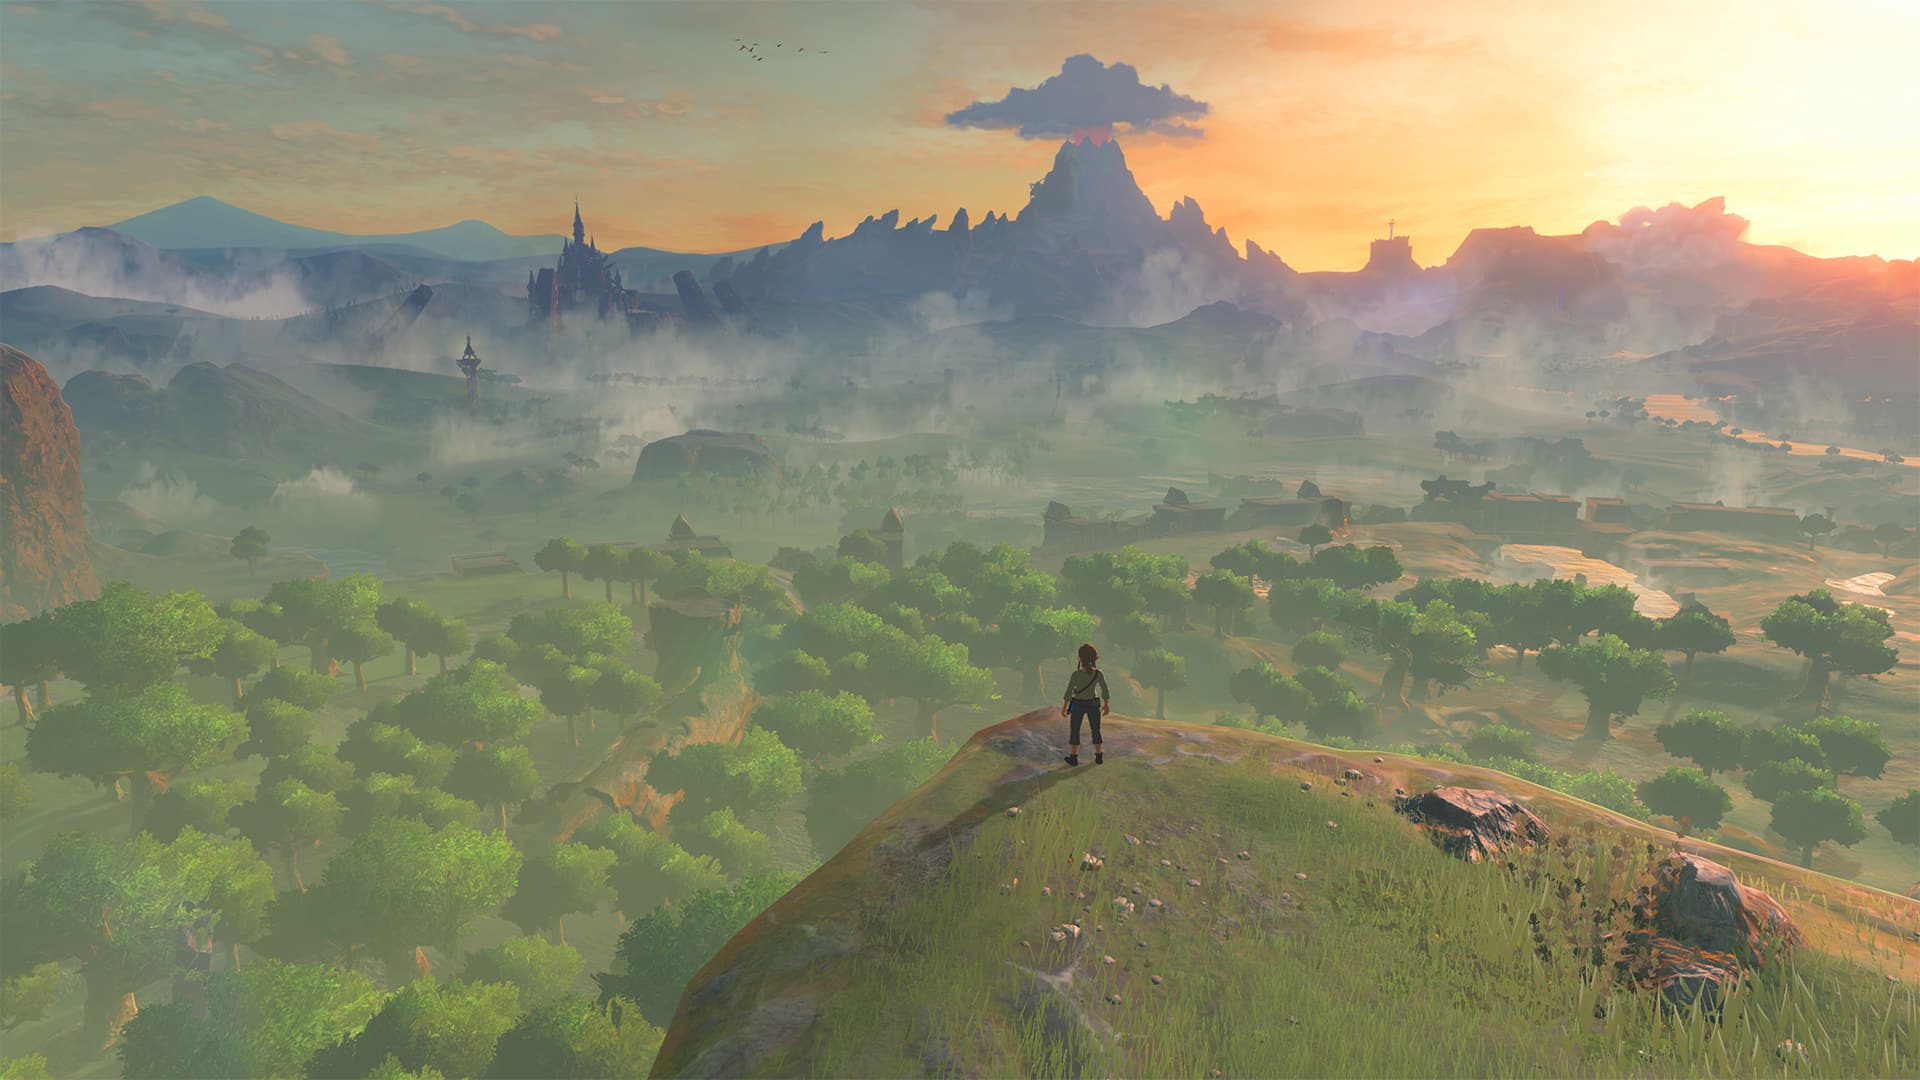 Marty Sliva Snapshot The Legend of Zelda: Breath of the Wild Great Plateau Shigeru Miyamoto child adventure childlike wonder